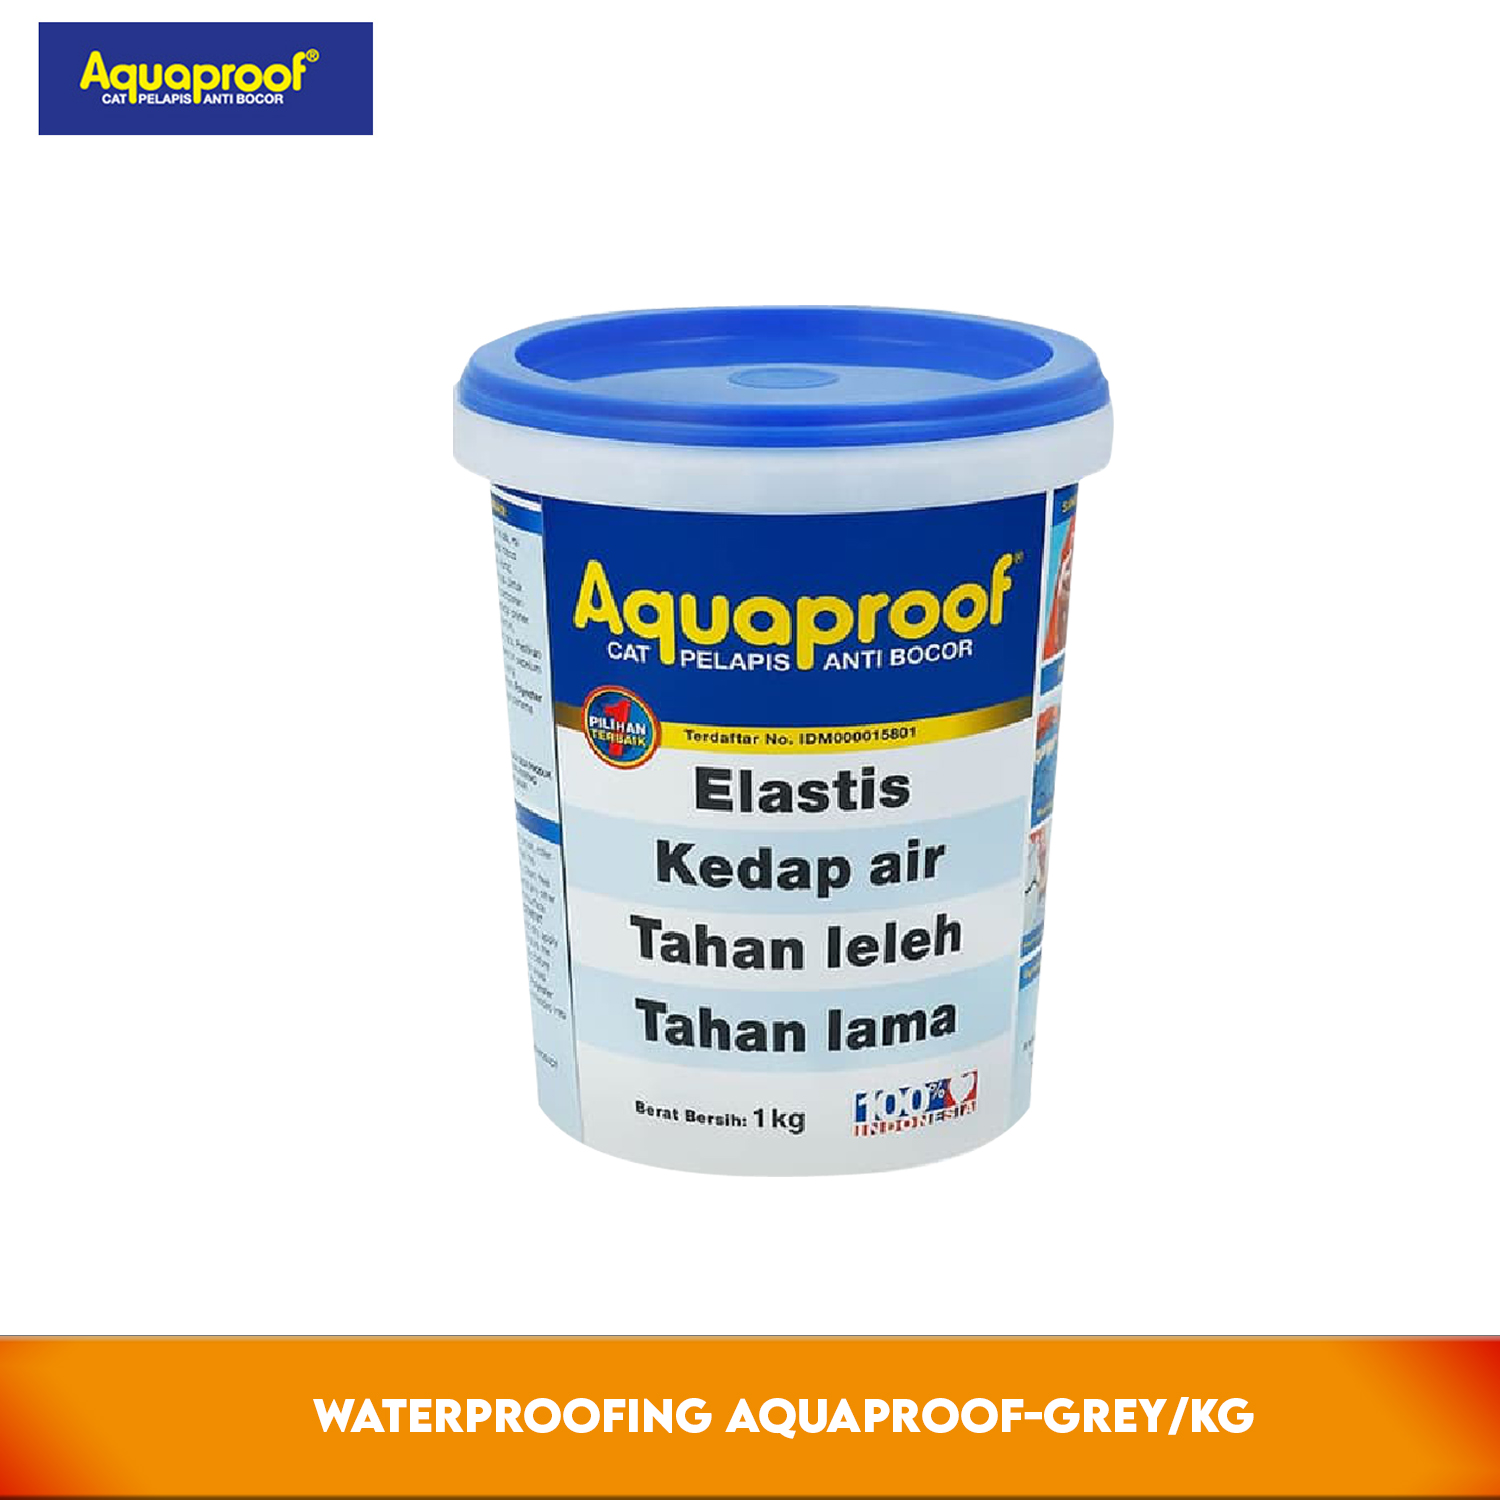 Aquaproof Waterproofing Cat Pelapis Anti Bocor - Grey 1 Kg